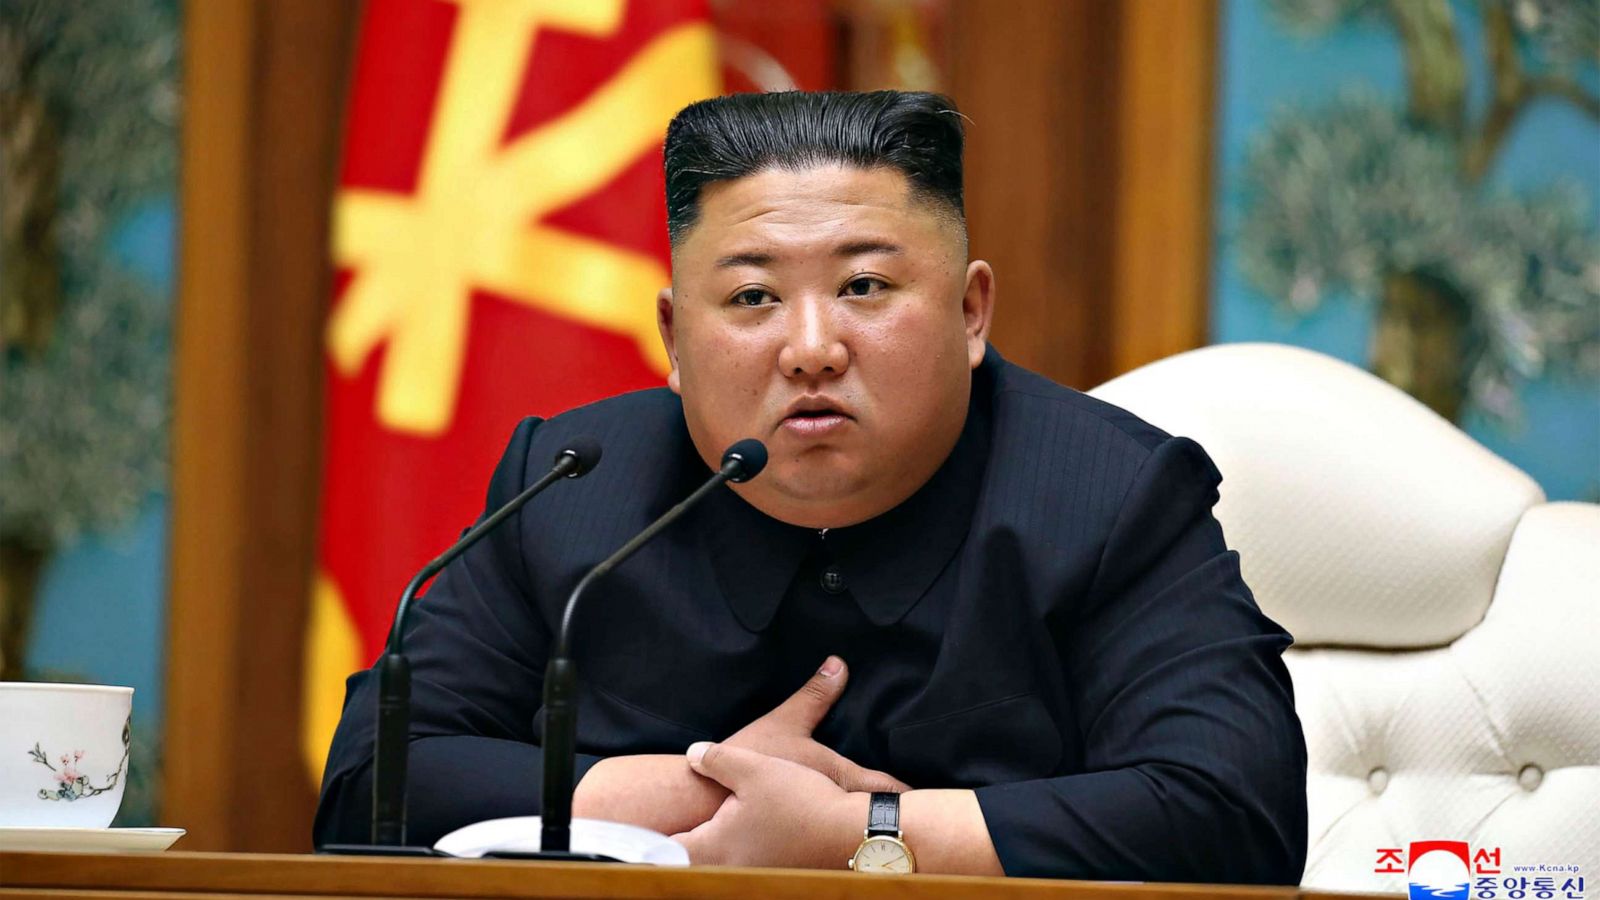 Supreme Leader Kim Jong Un Makes Speech at Sixth National Conference of War Veterans - Image